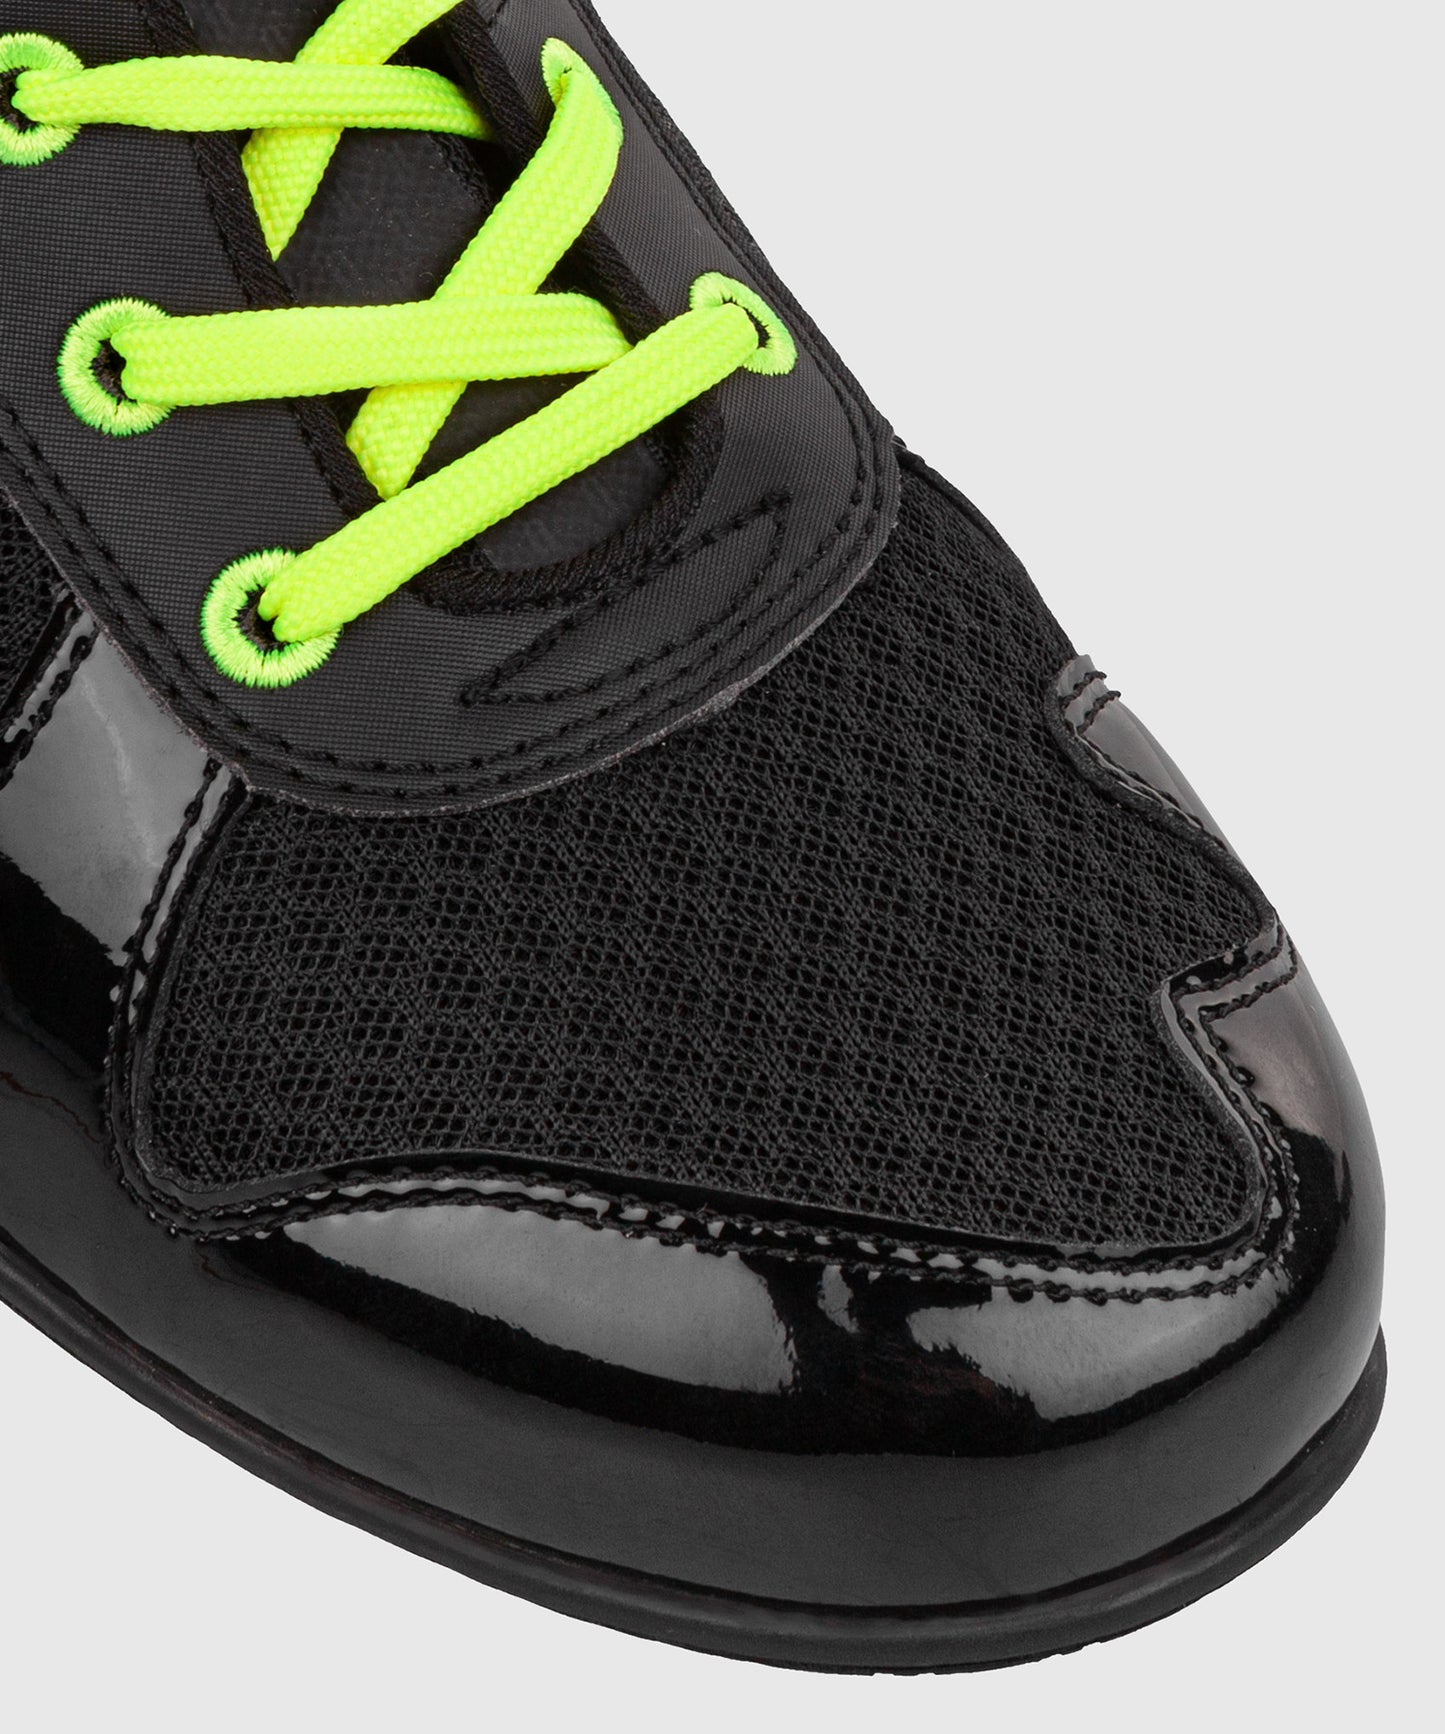 Venum Elite VTC 2 Edition Boxing Shoes - Black/Neo Yellow